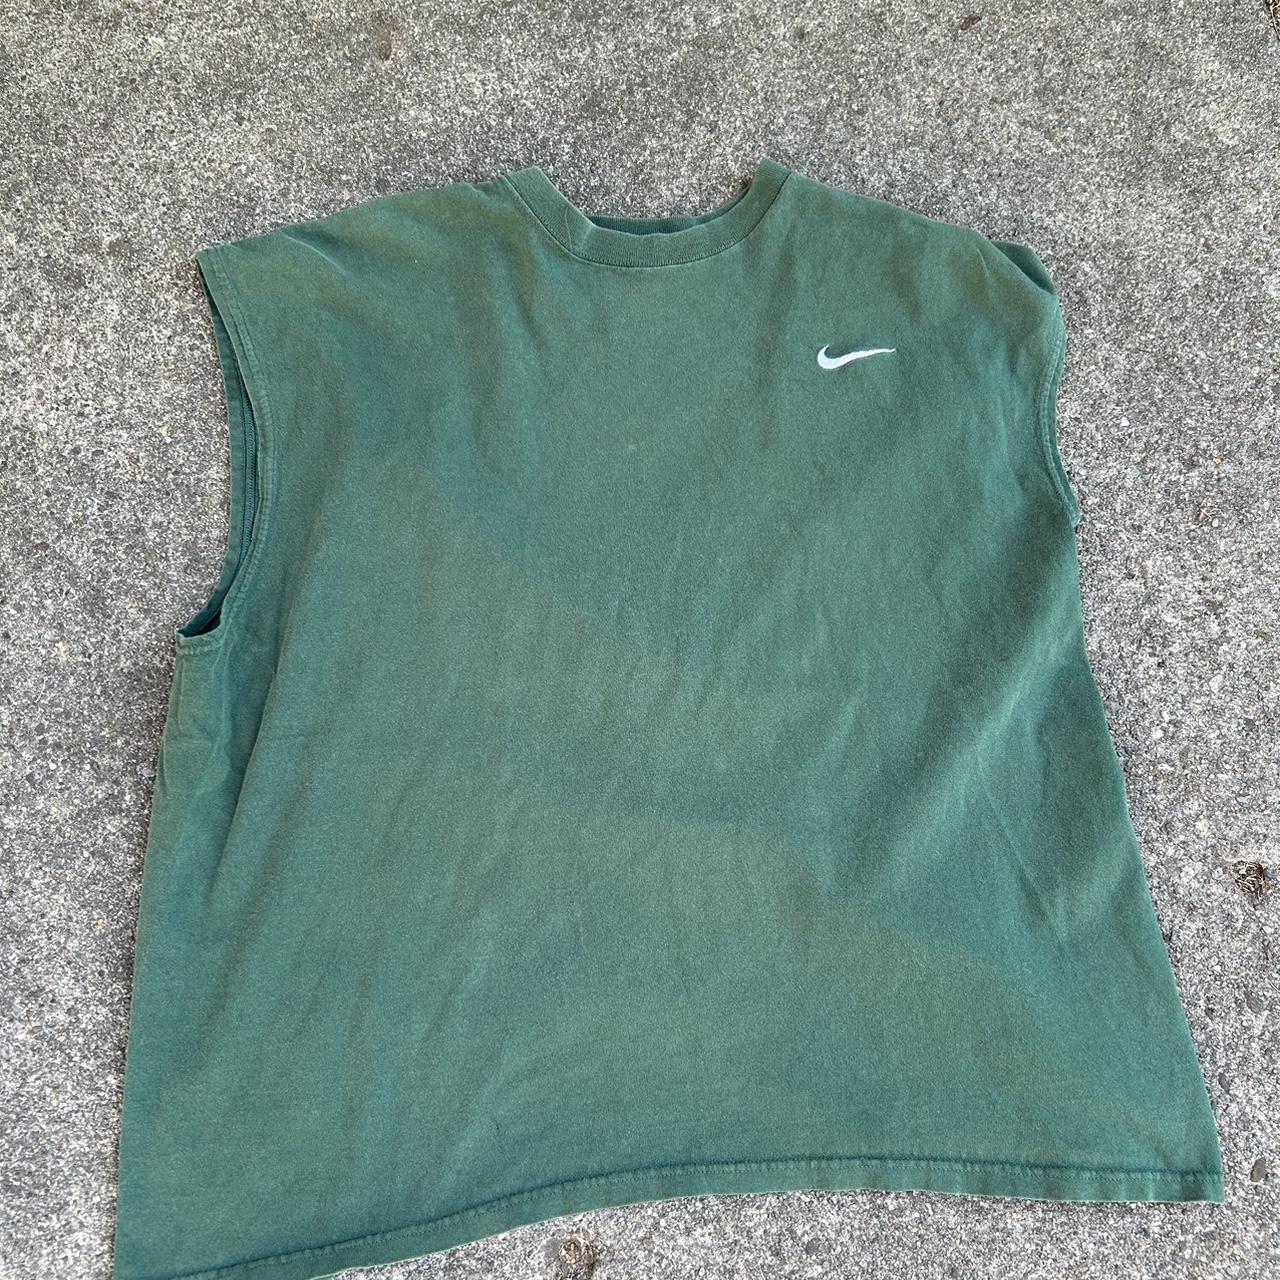 Nike Men's Green and White Vest (2)